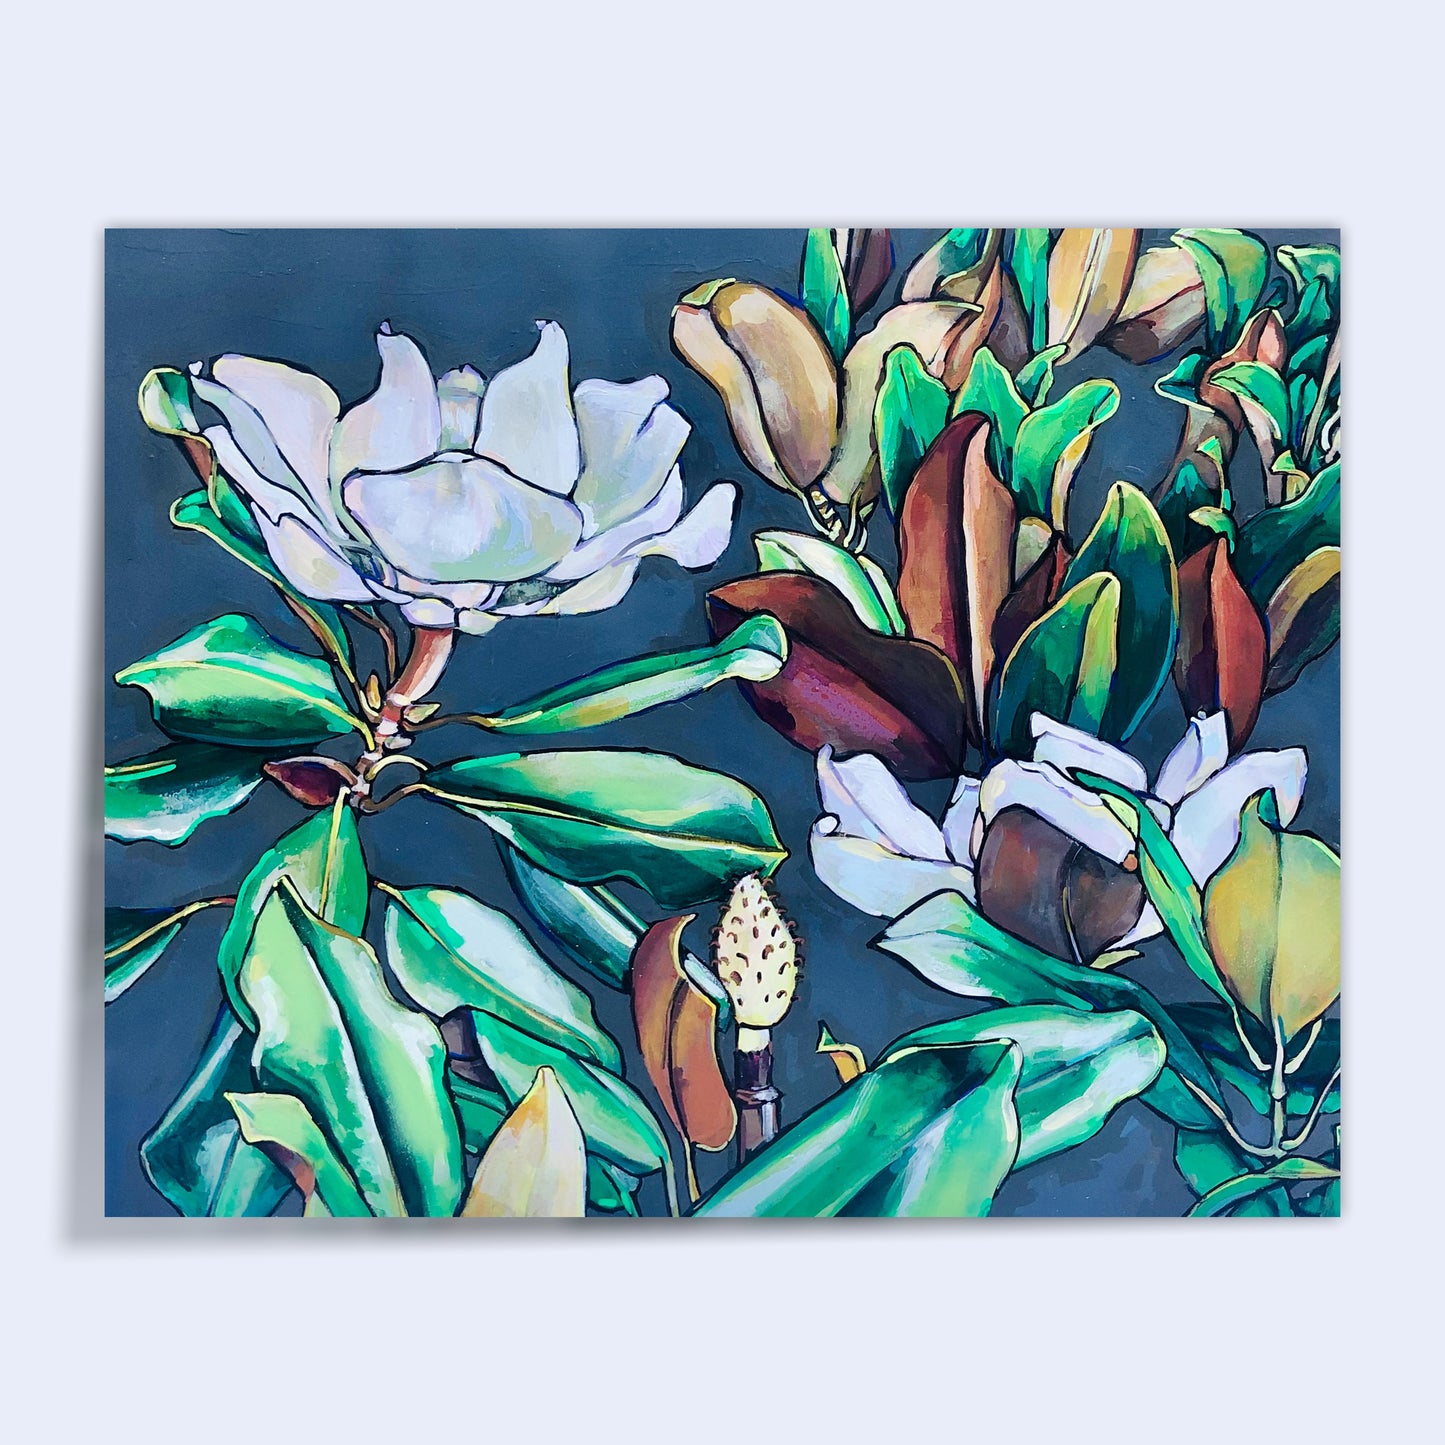 16 x 20 'Magnolias' Print